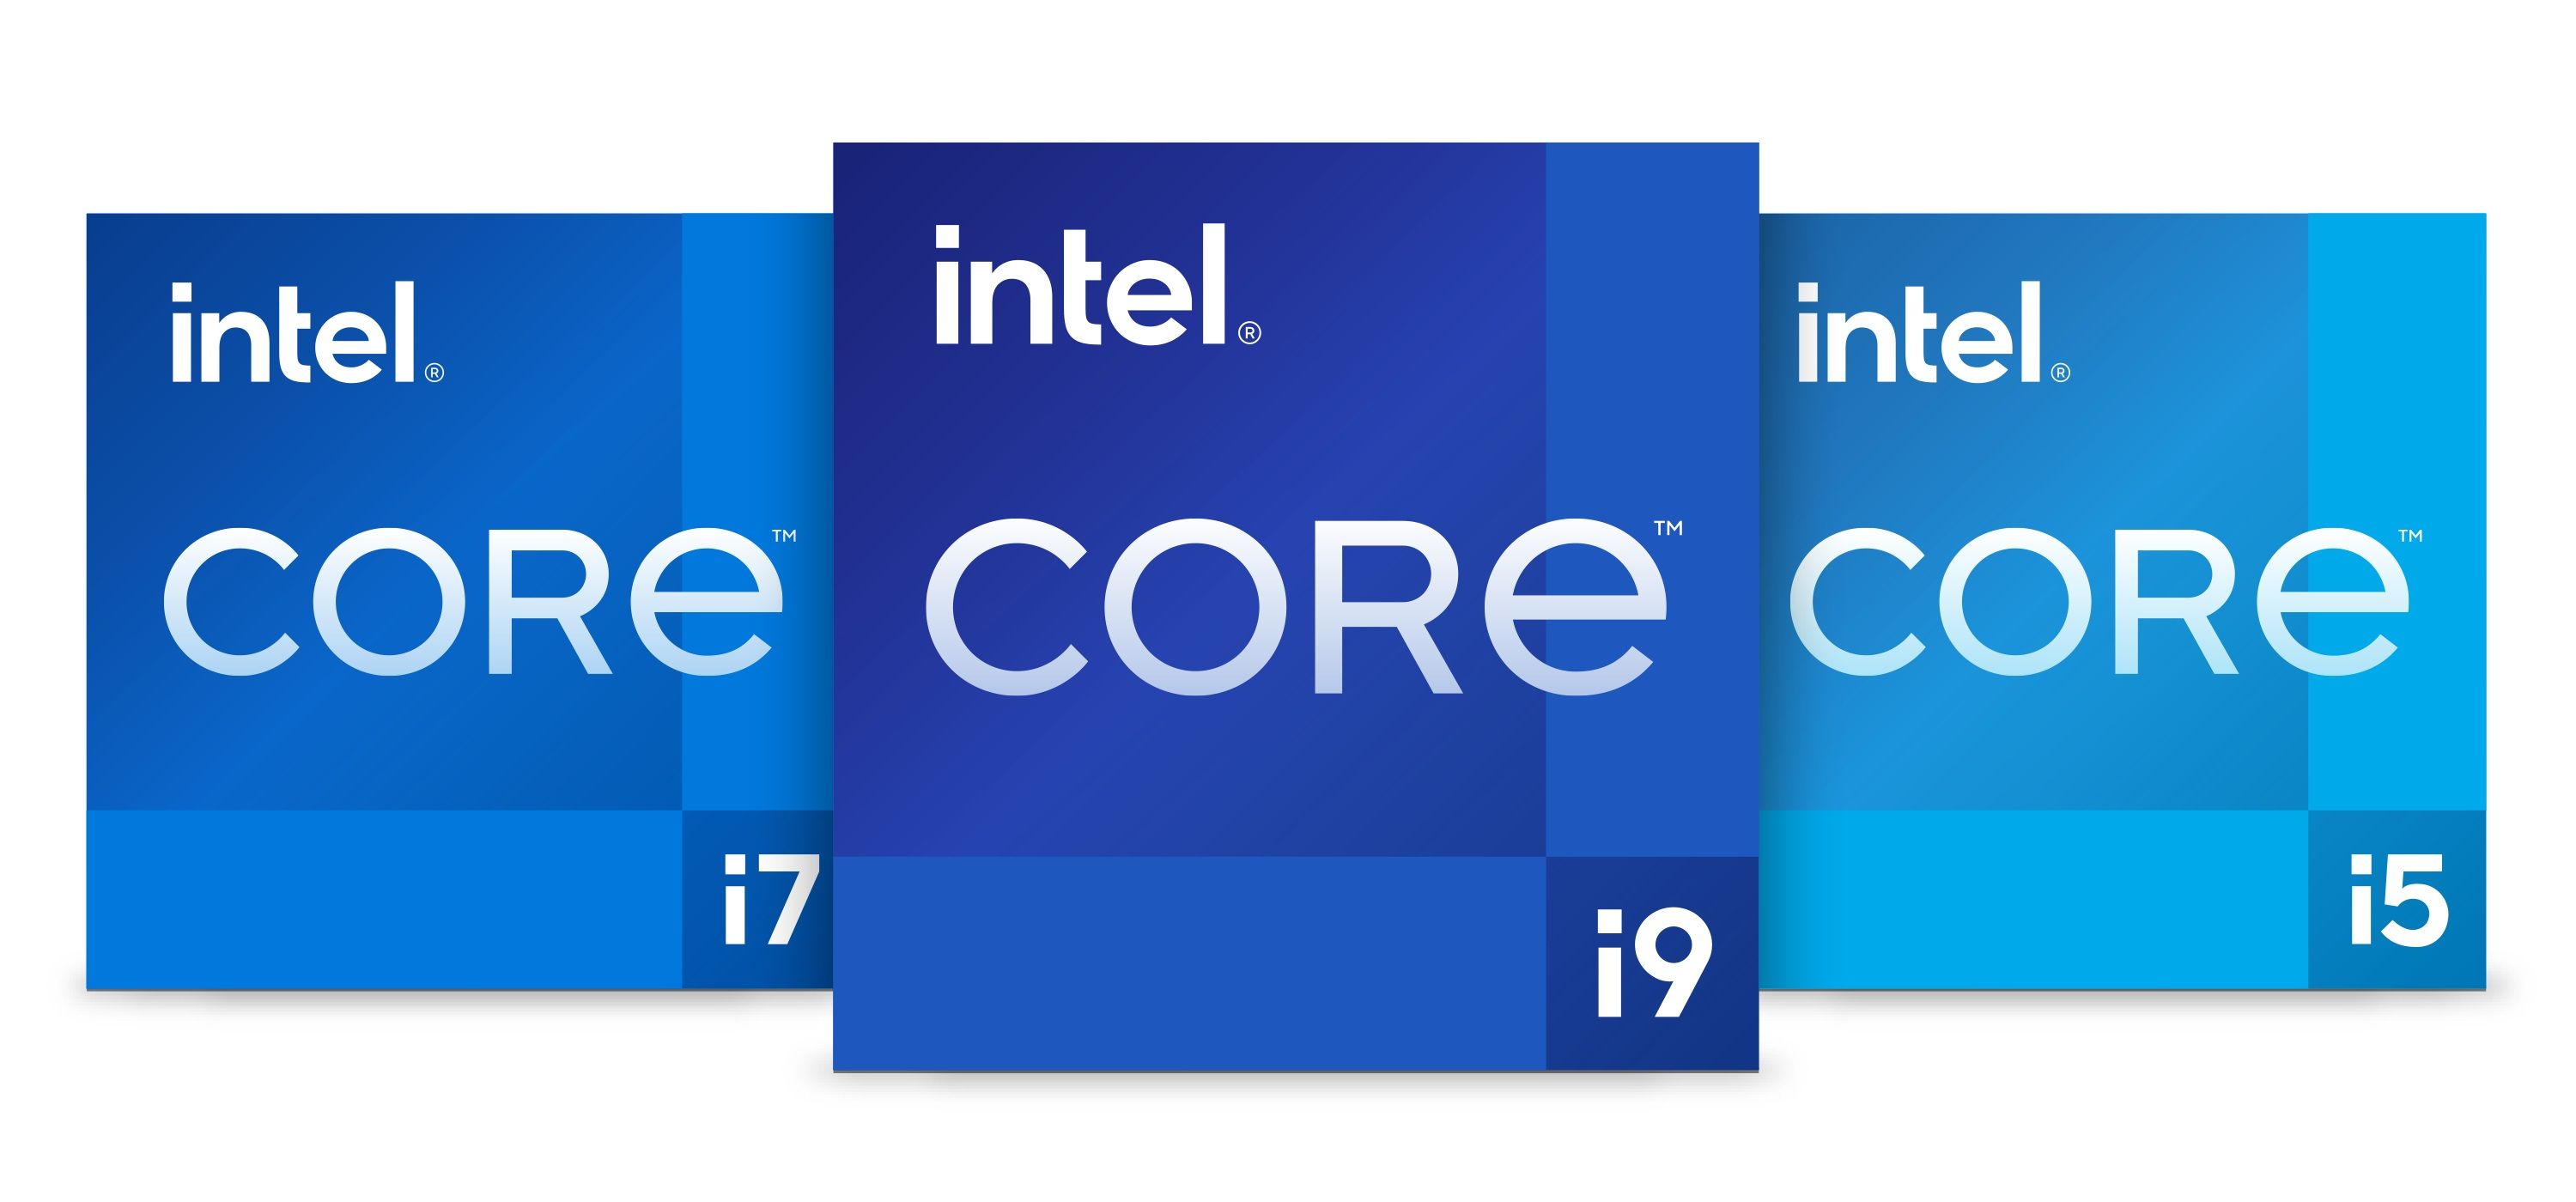 12th generation Intel Core logos